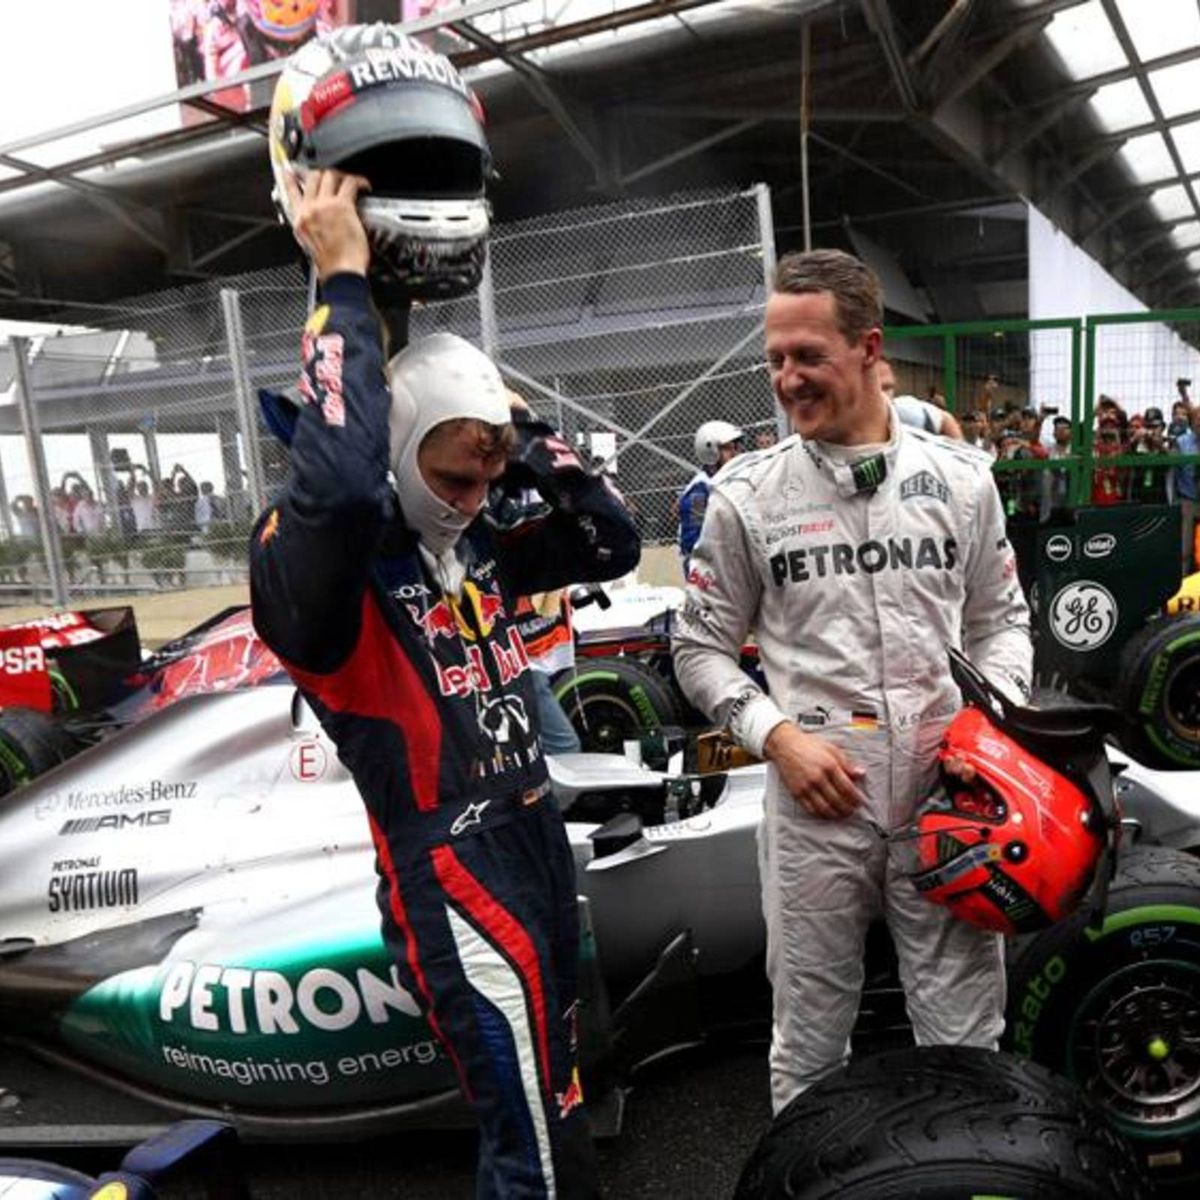 F1 2012 season review: How Sebastian Vettel beat Fernando Alonso